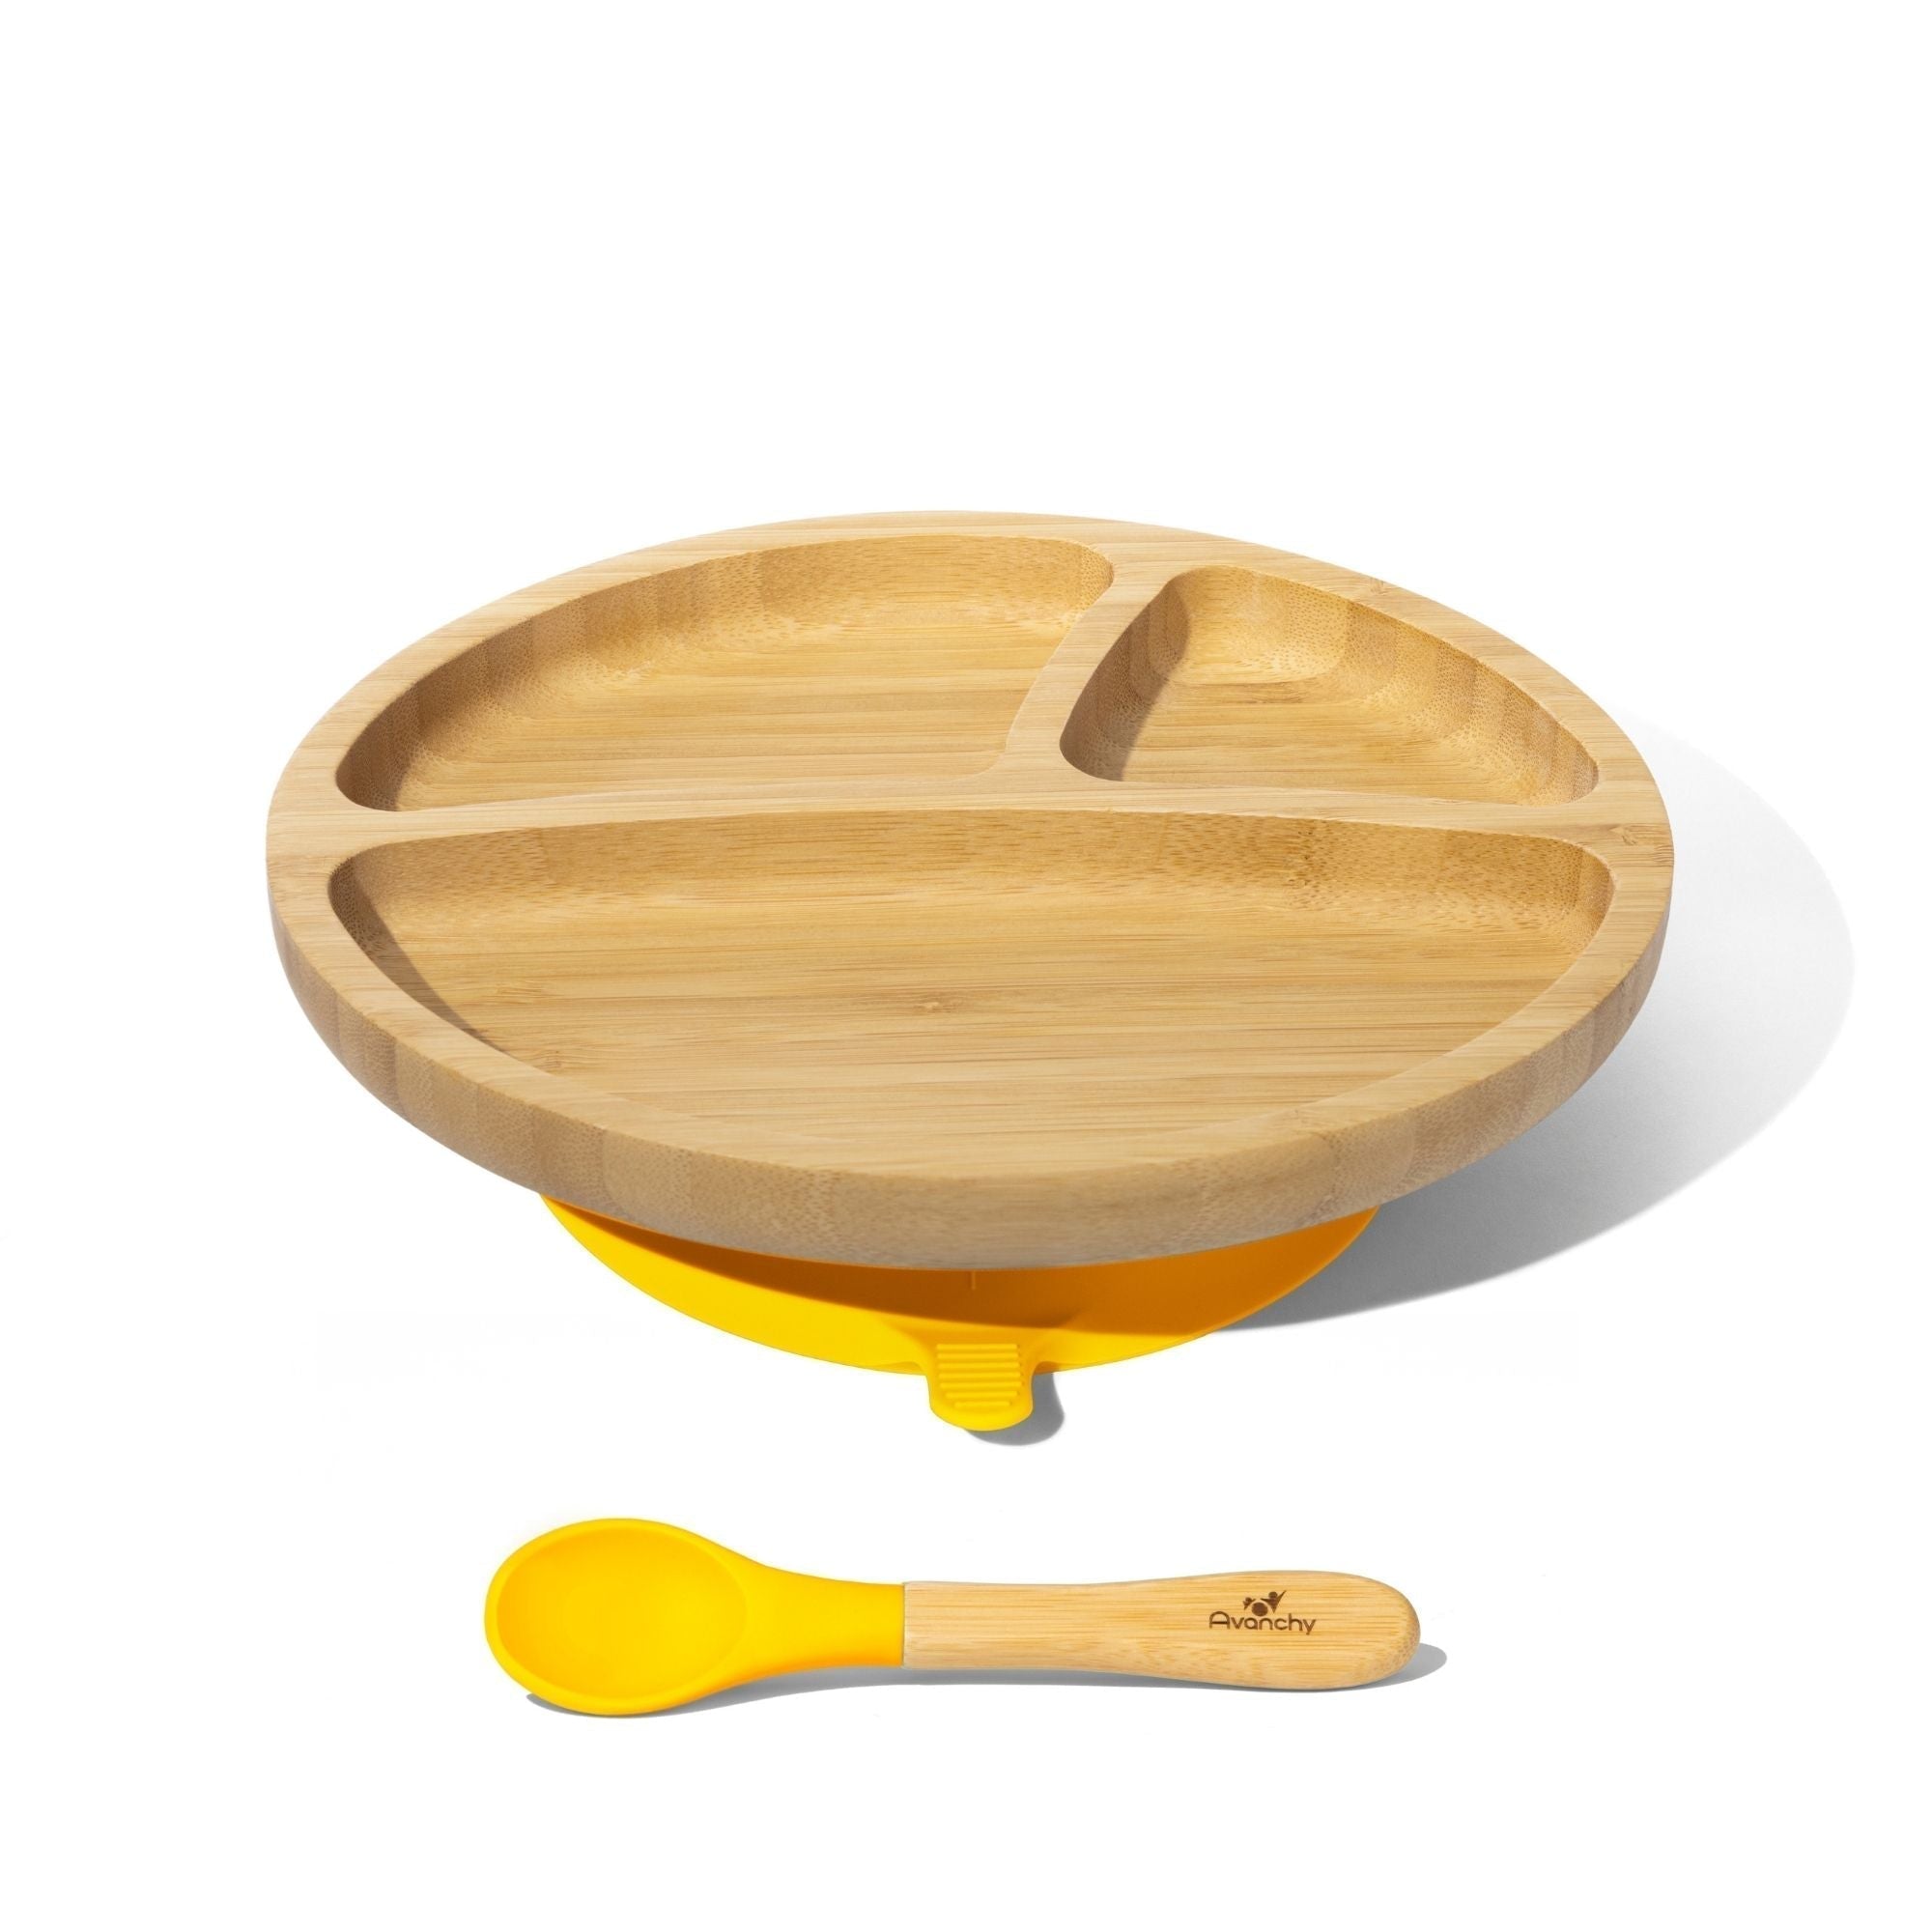 Avanchy Bamboo Toddler Plate & Spoon - Orange